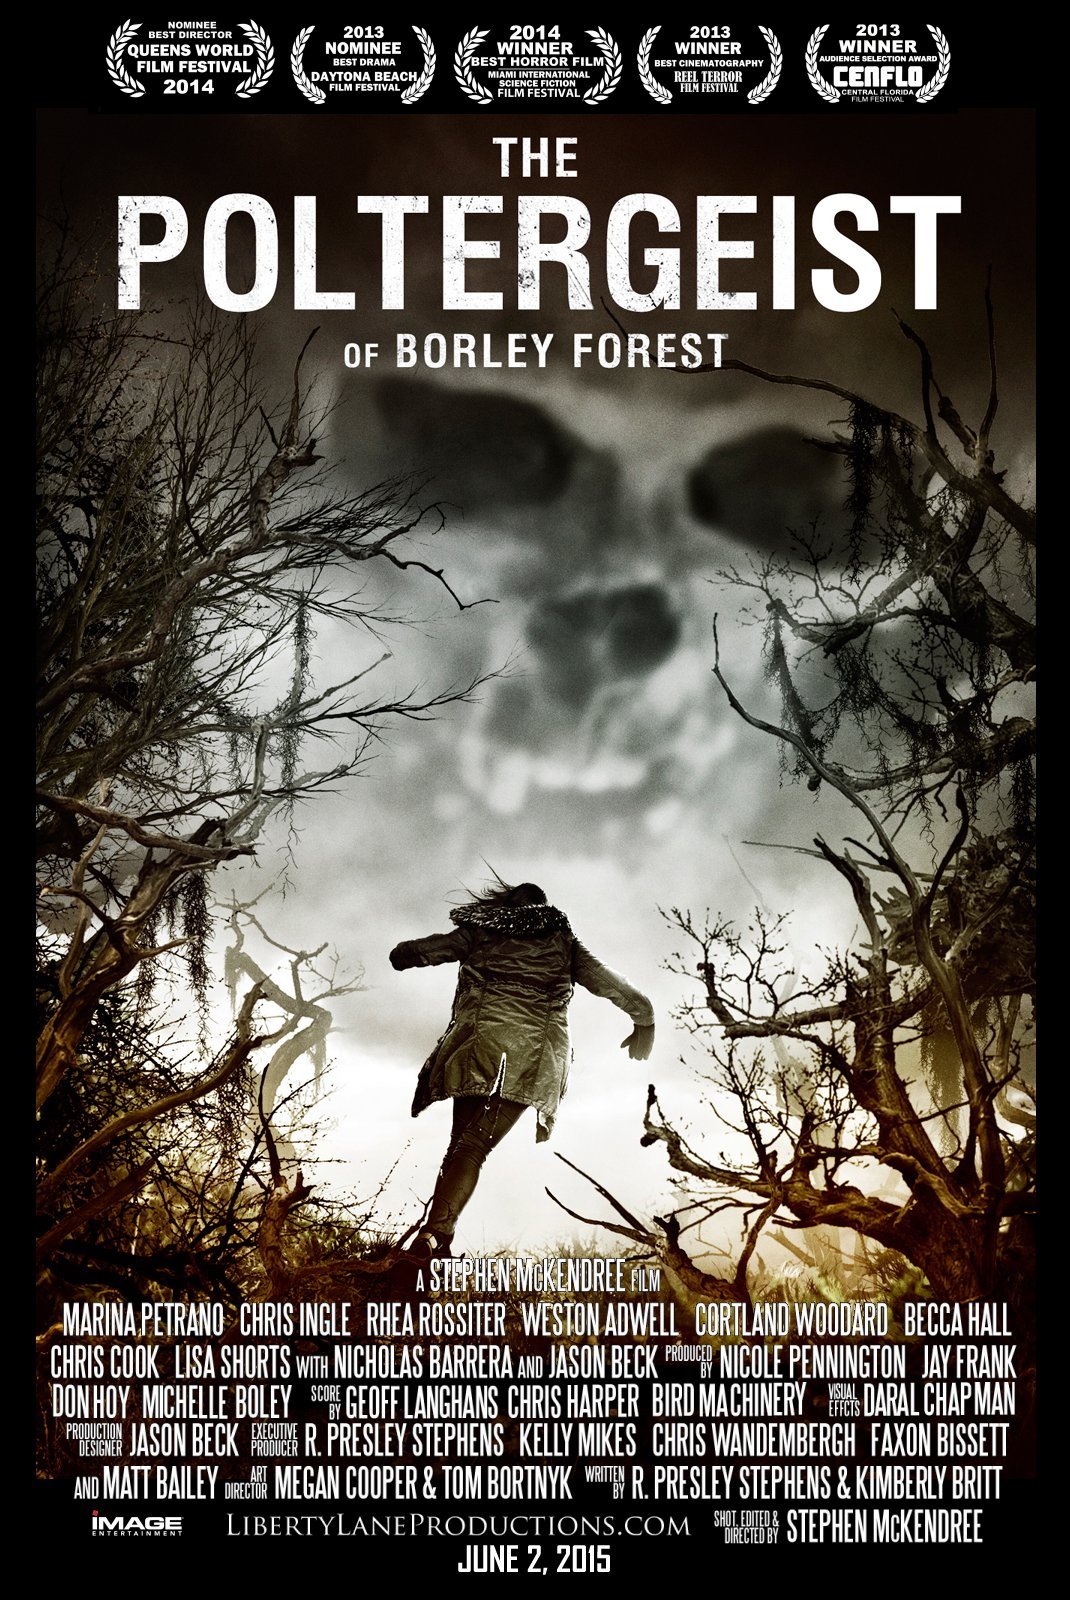 Nonton film The Poltergeist of Borley Forest layarkaca21 indoxx1 ganool online streaming terbaru